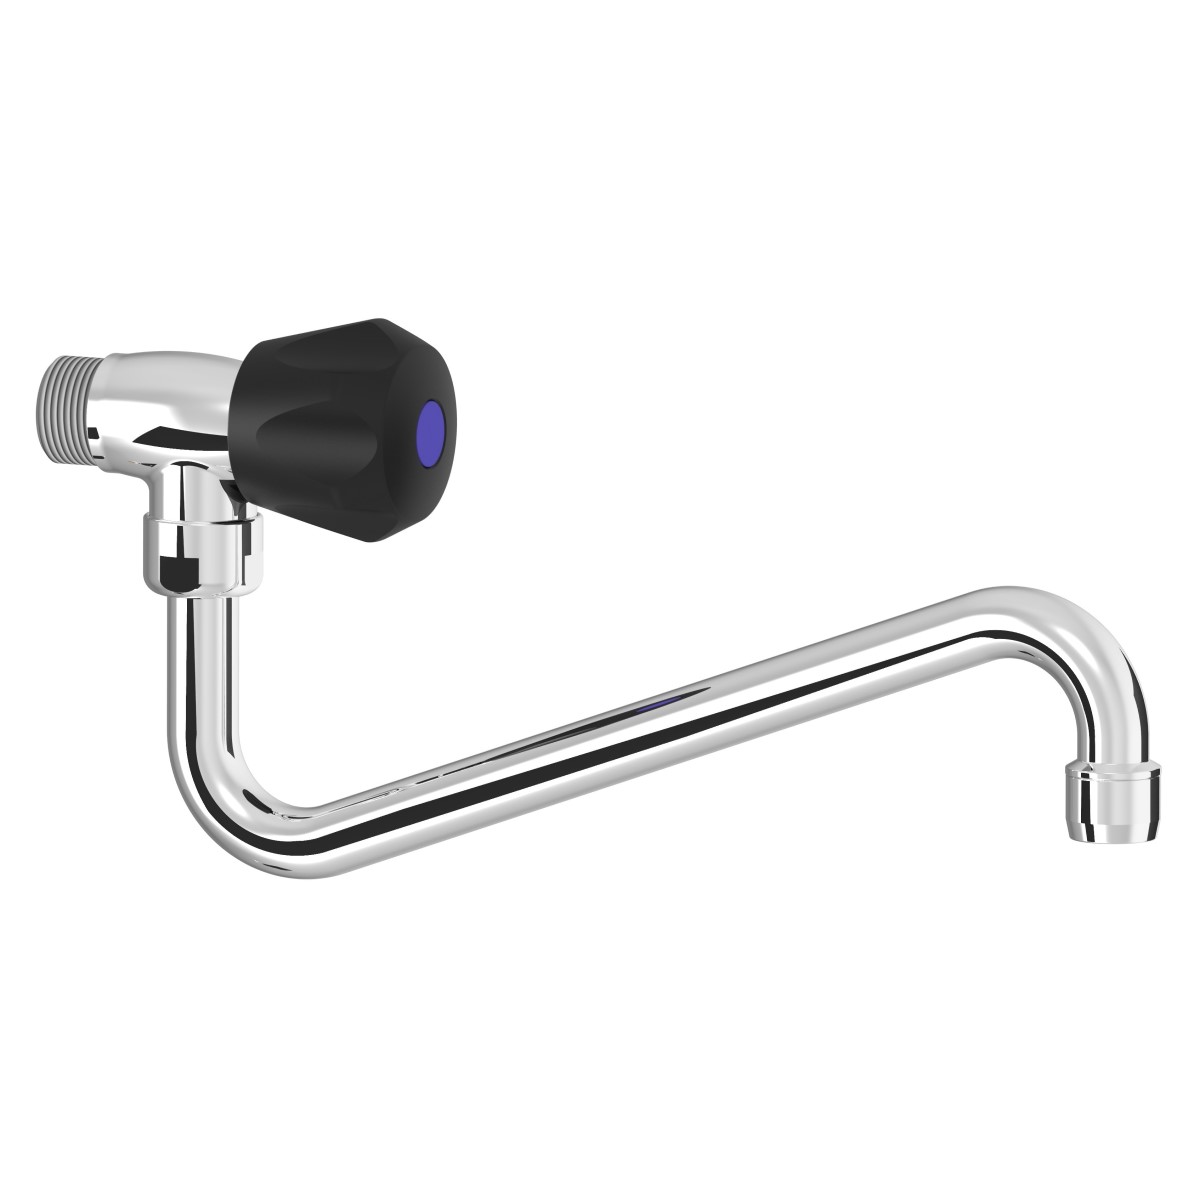 Horizontal tap with plastic handle